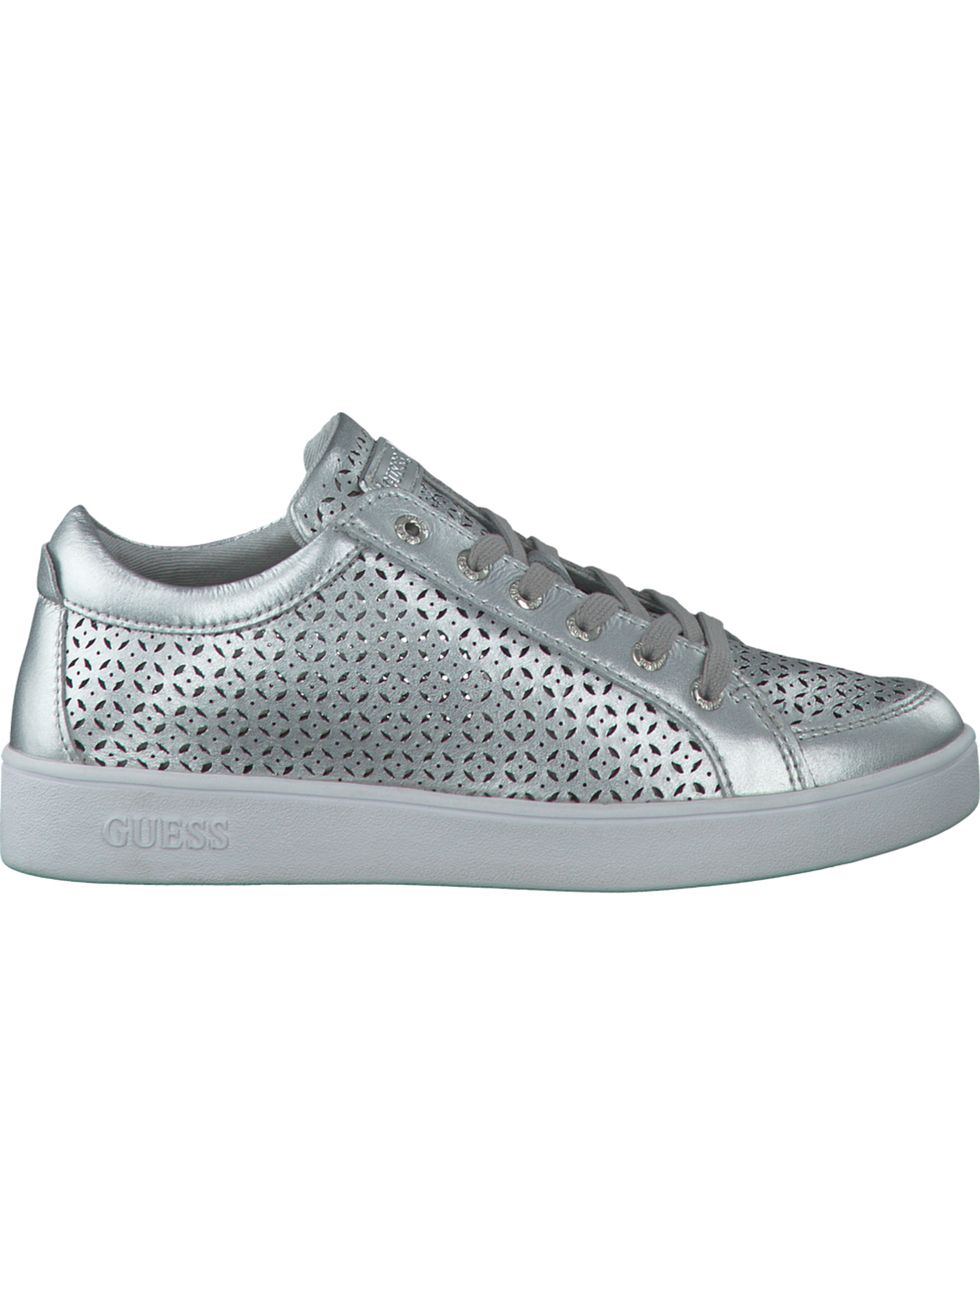 Footwear, Product, Shoe, White, Athletic shoe, Style, Line, Pattern, Sneakers, Light, 